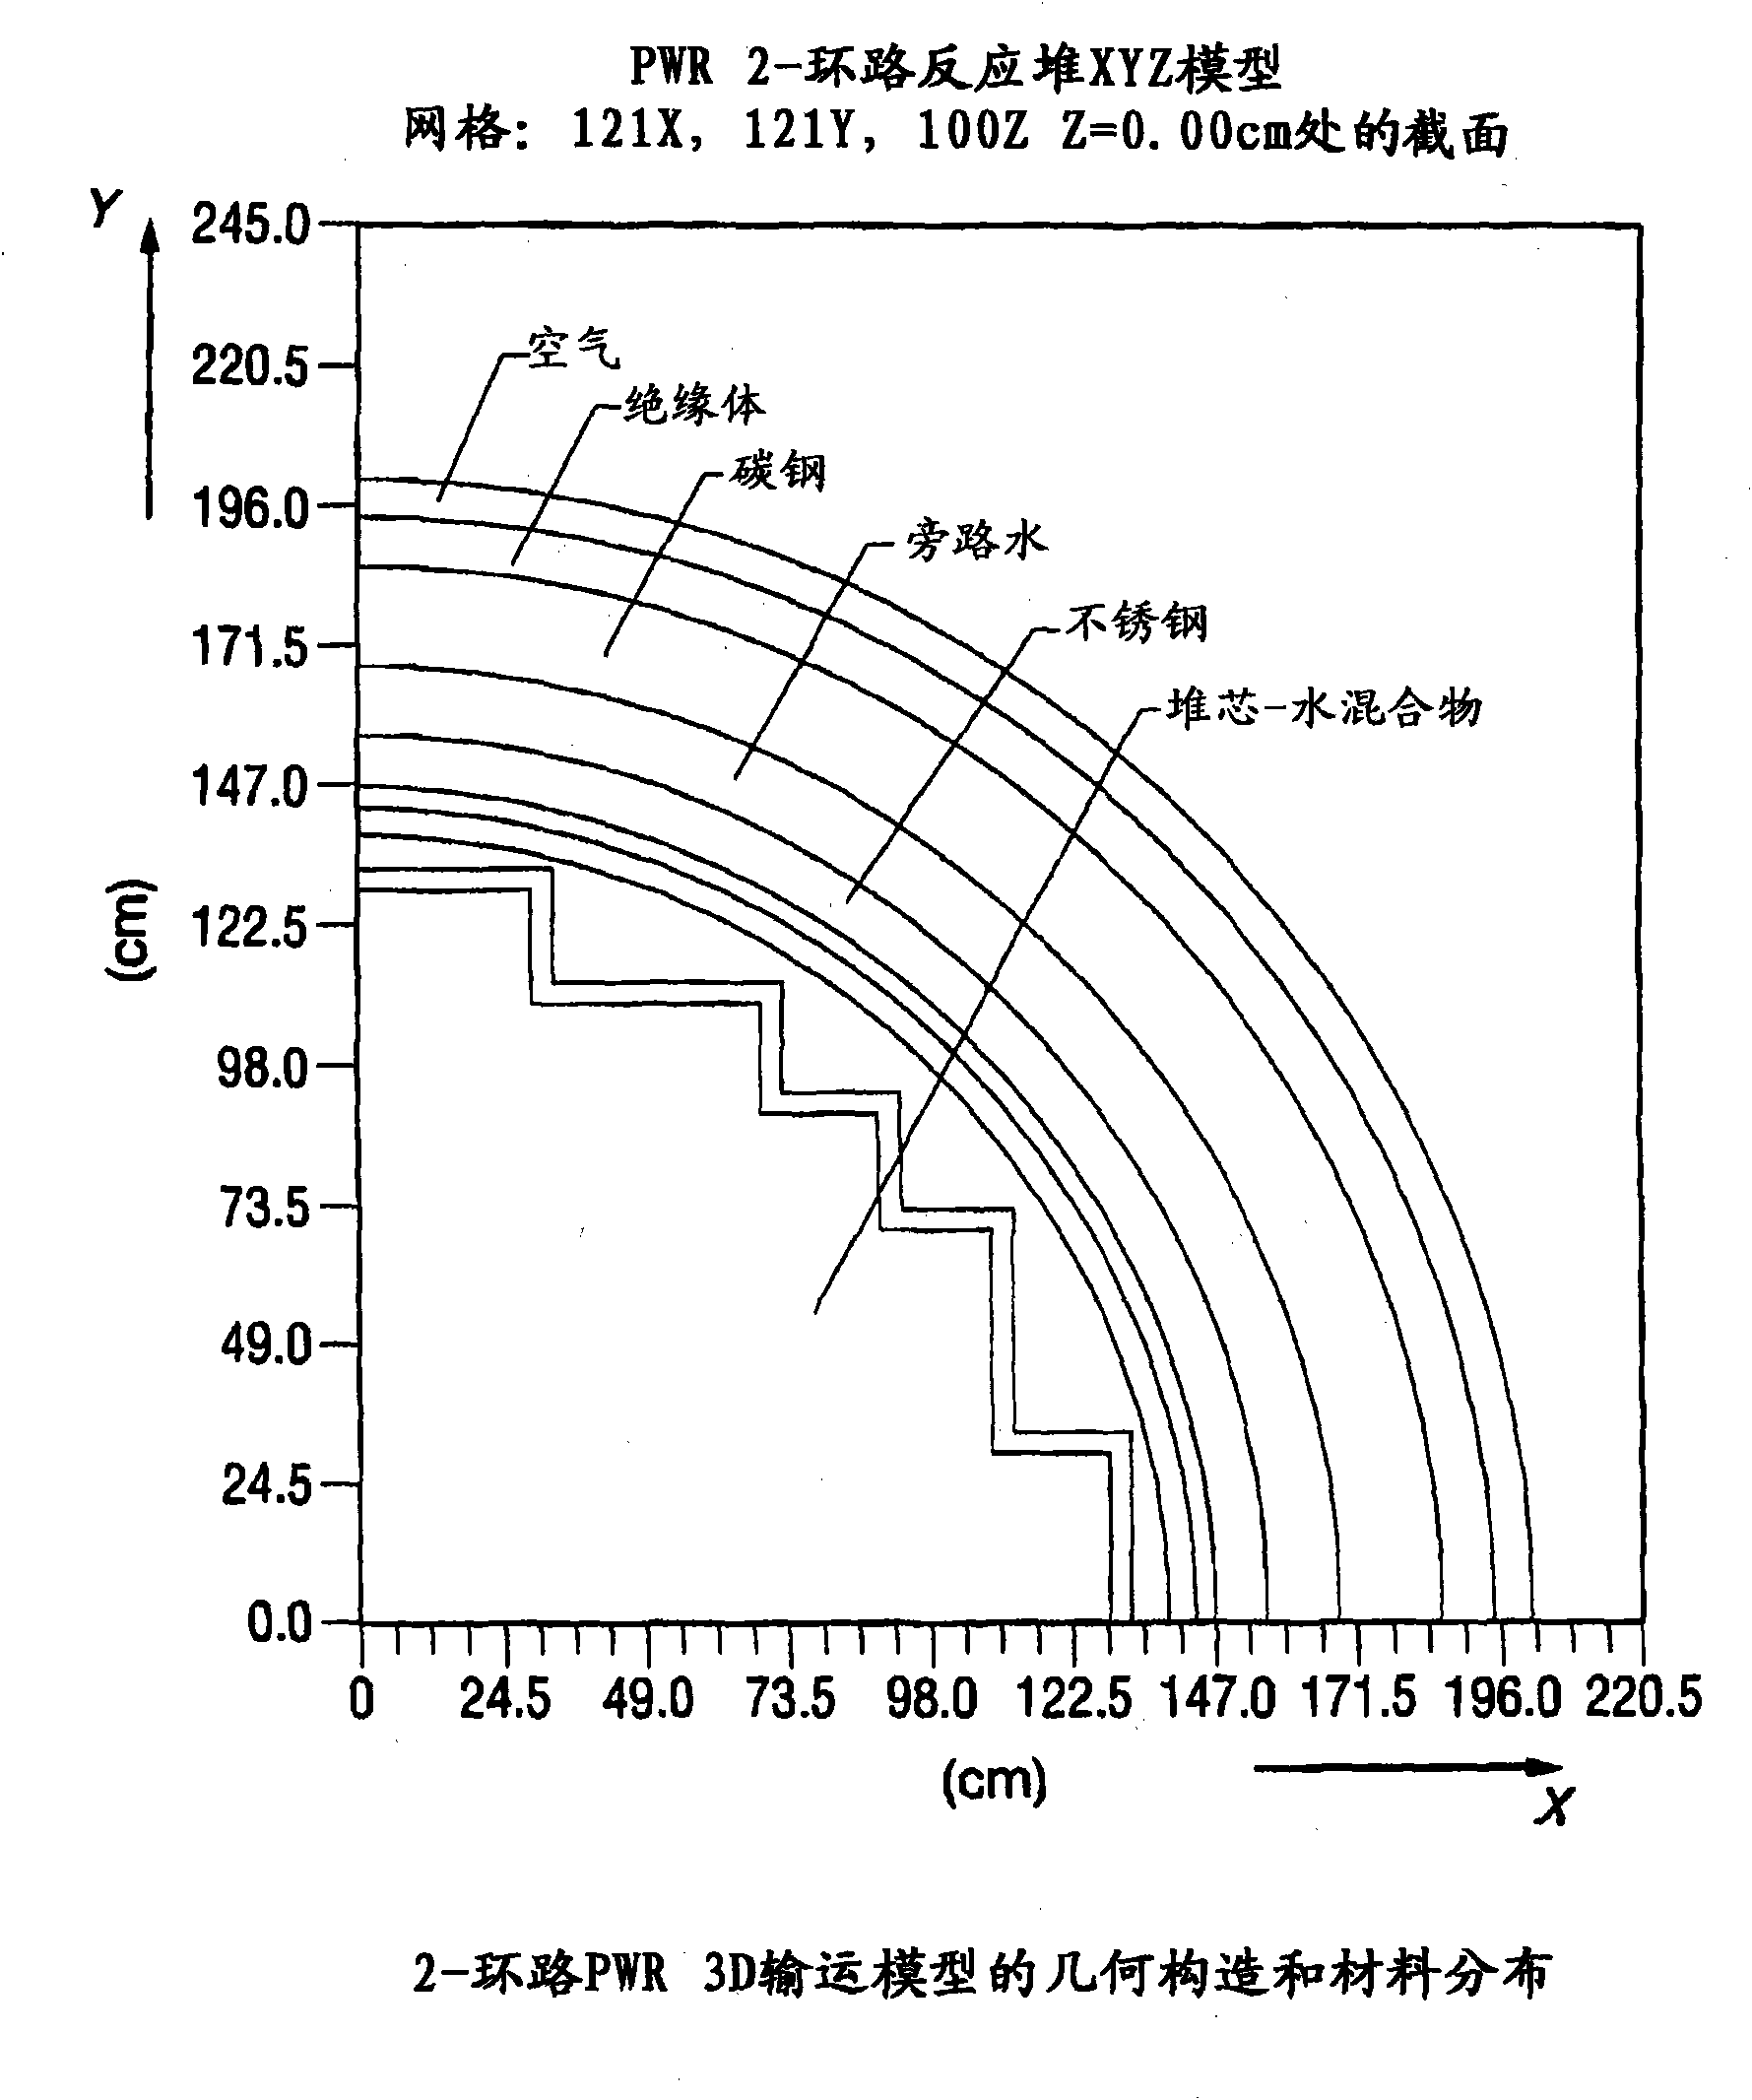 Reactor dosimetry applications using parallel 3-D radiation transport code